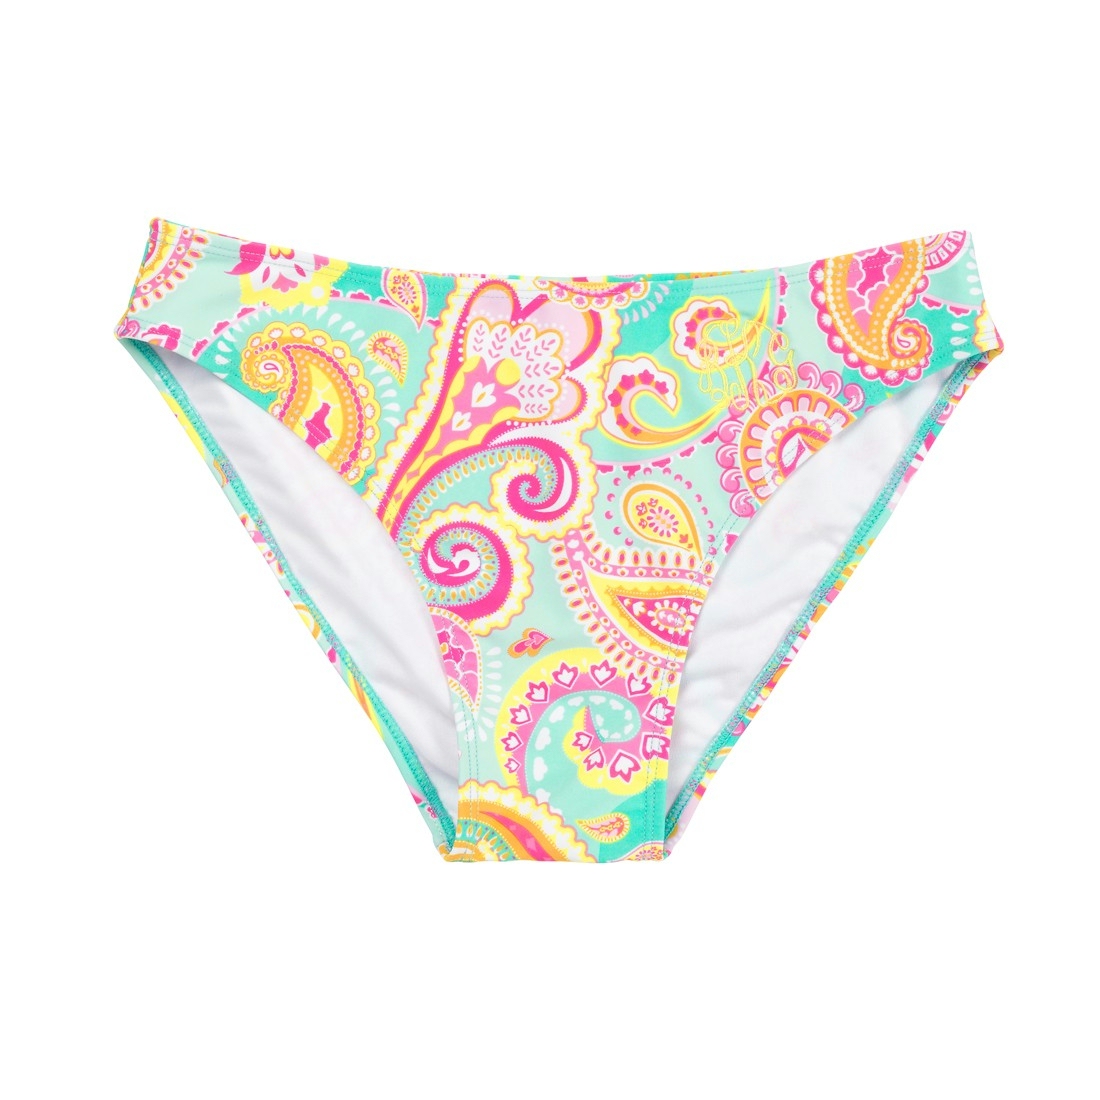 Bikini Swimsuit Bottom Embroidery Blanks - SUMMER PAISLEY - CLOSEOUT